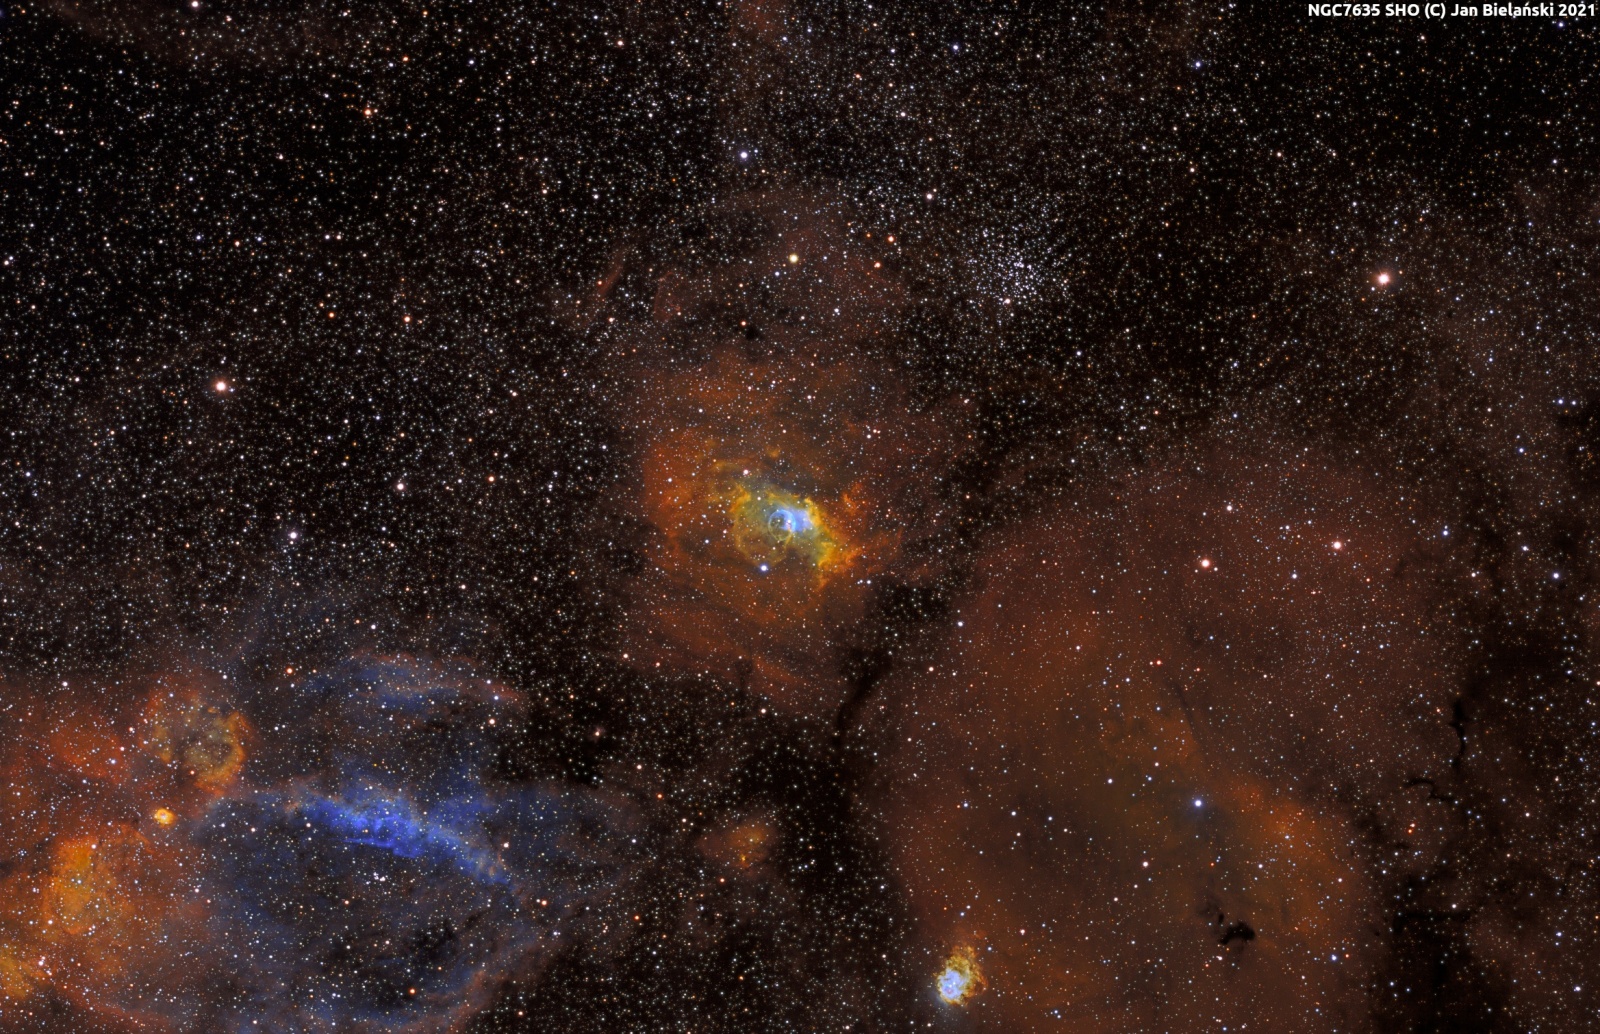 NGC7635_SHO_Ha_44_SII_41_OIII_42x600s_version2_Skala-1-4.thumb.jpg.7793210a0c86c0591f46ab3e00b60b14.jpg